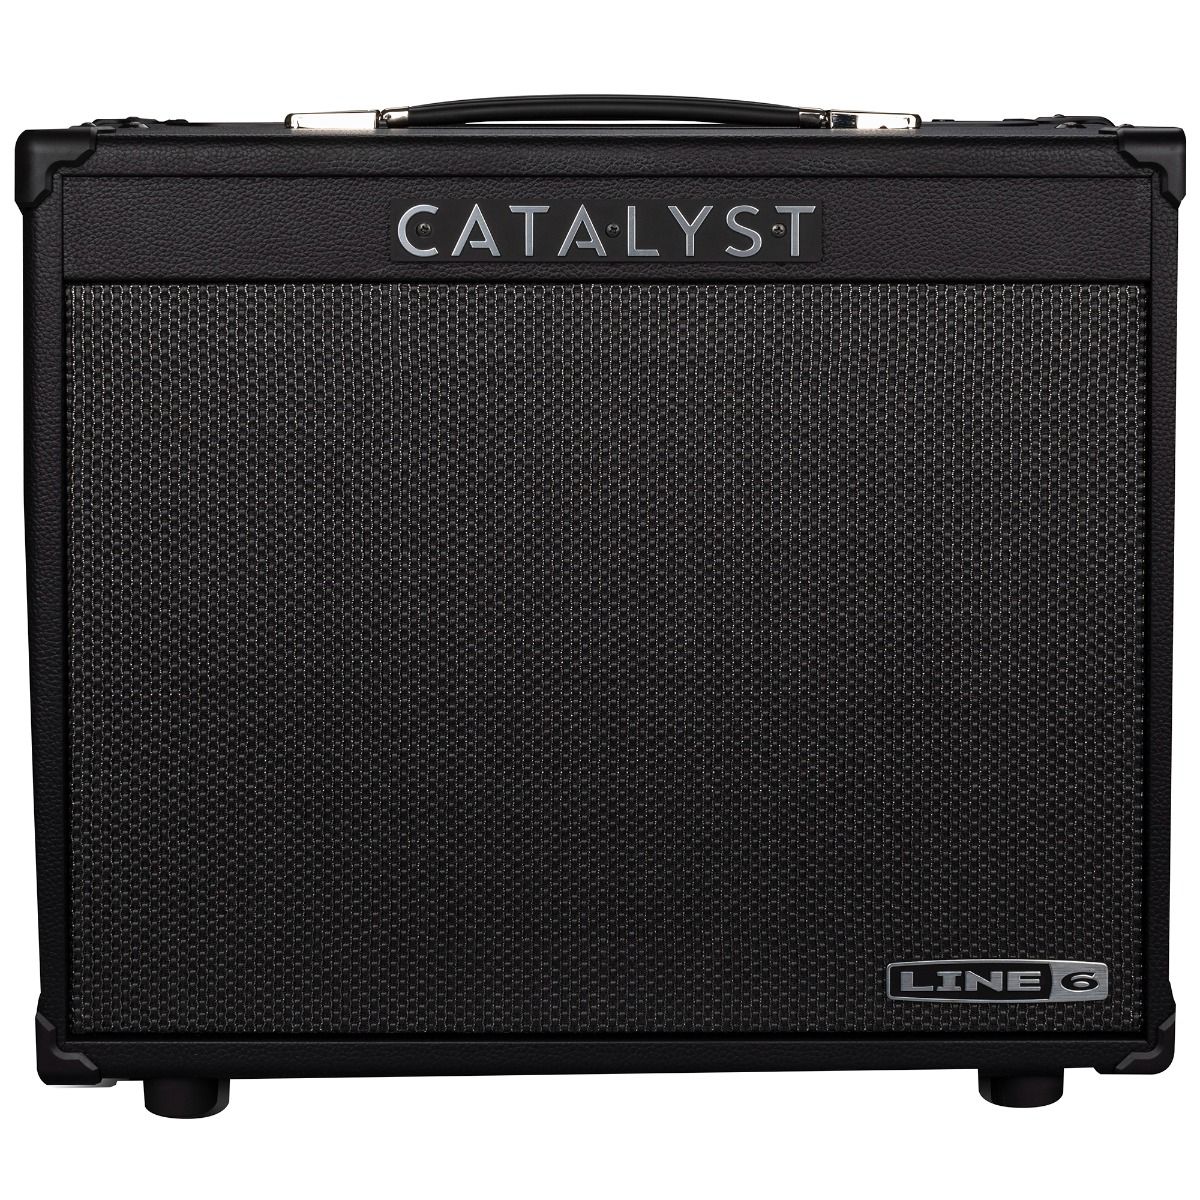 Line 6 Catalyst 60 1x12 60w Guitar Combo Amp